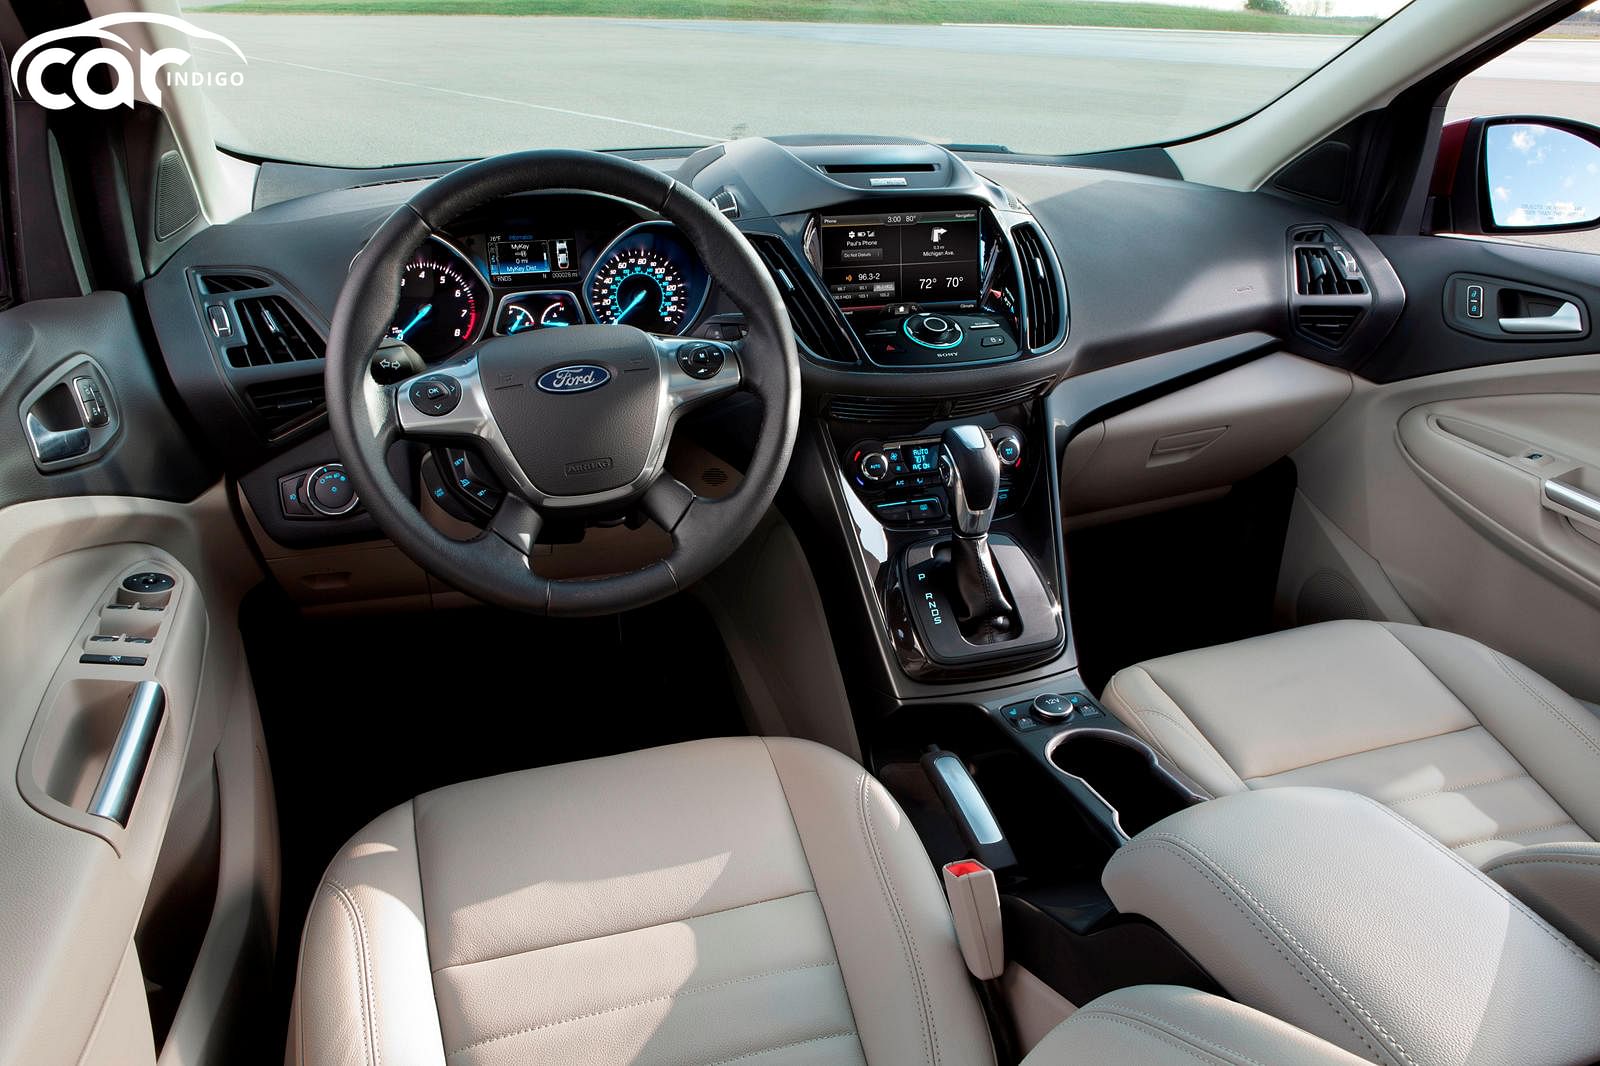 2012 Ford Escape Interior Review - Seating, Infotainment, Dashboard and  Features | CarIndigo.com